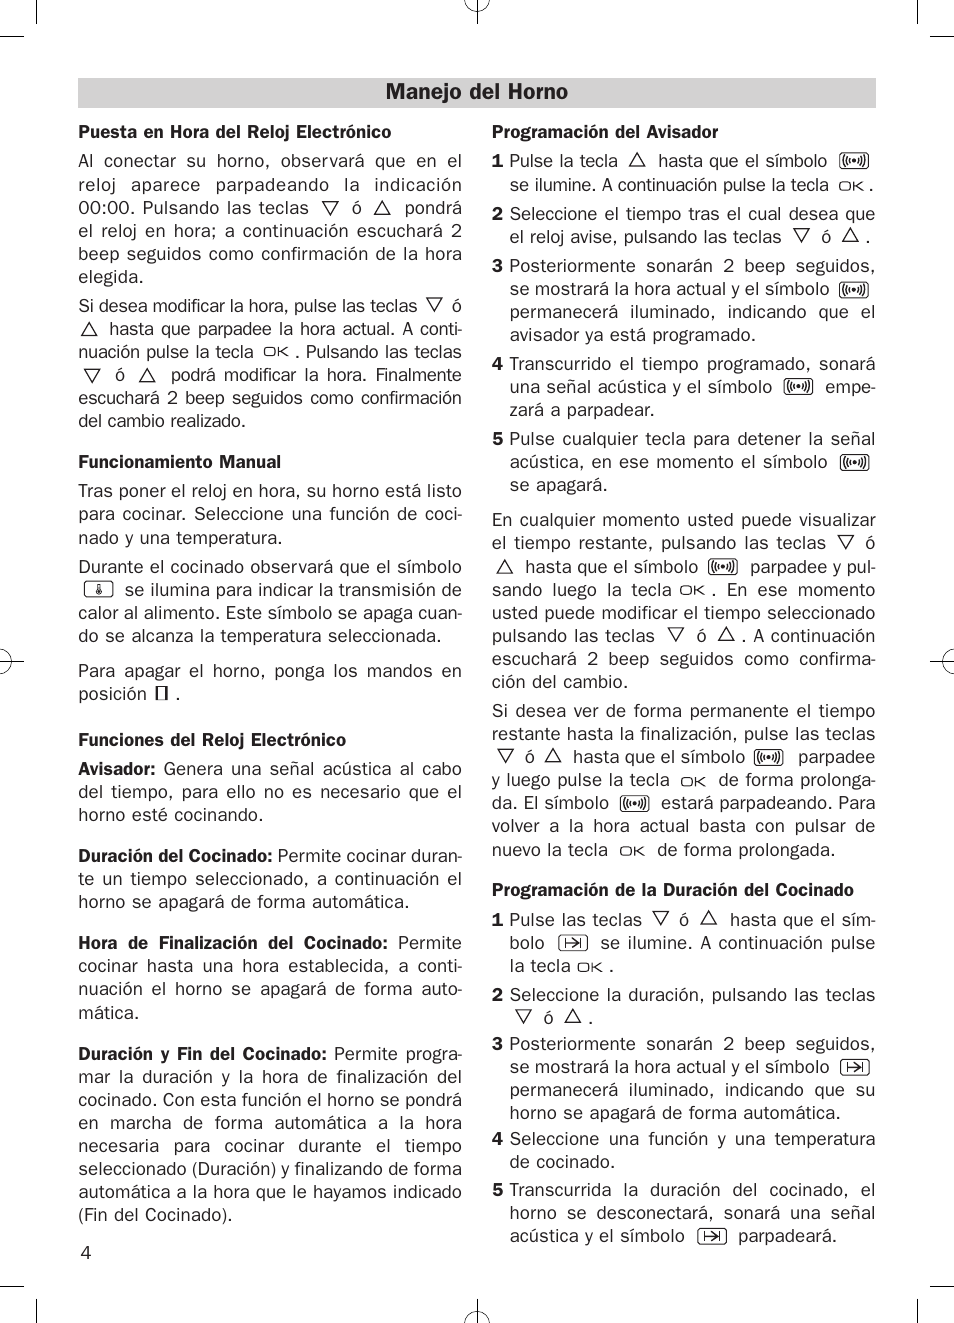 Manejo del horno | Teka HKE 635 User Manual | Page 4 / 24 | Original mode